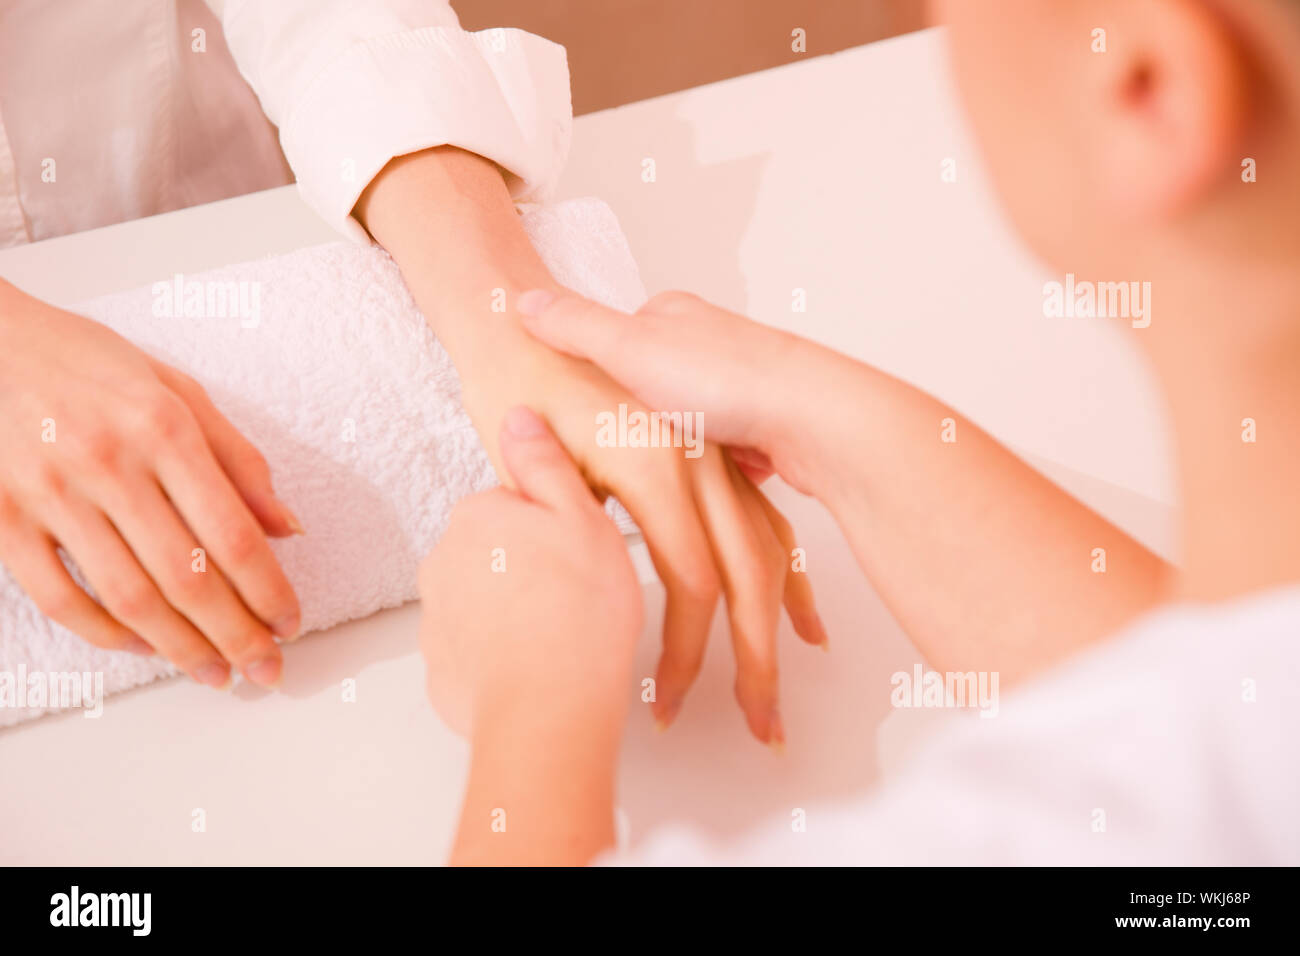 Masseuse massaging hand Stock Photo